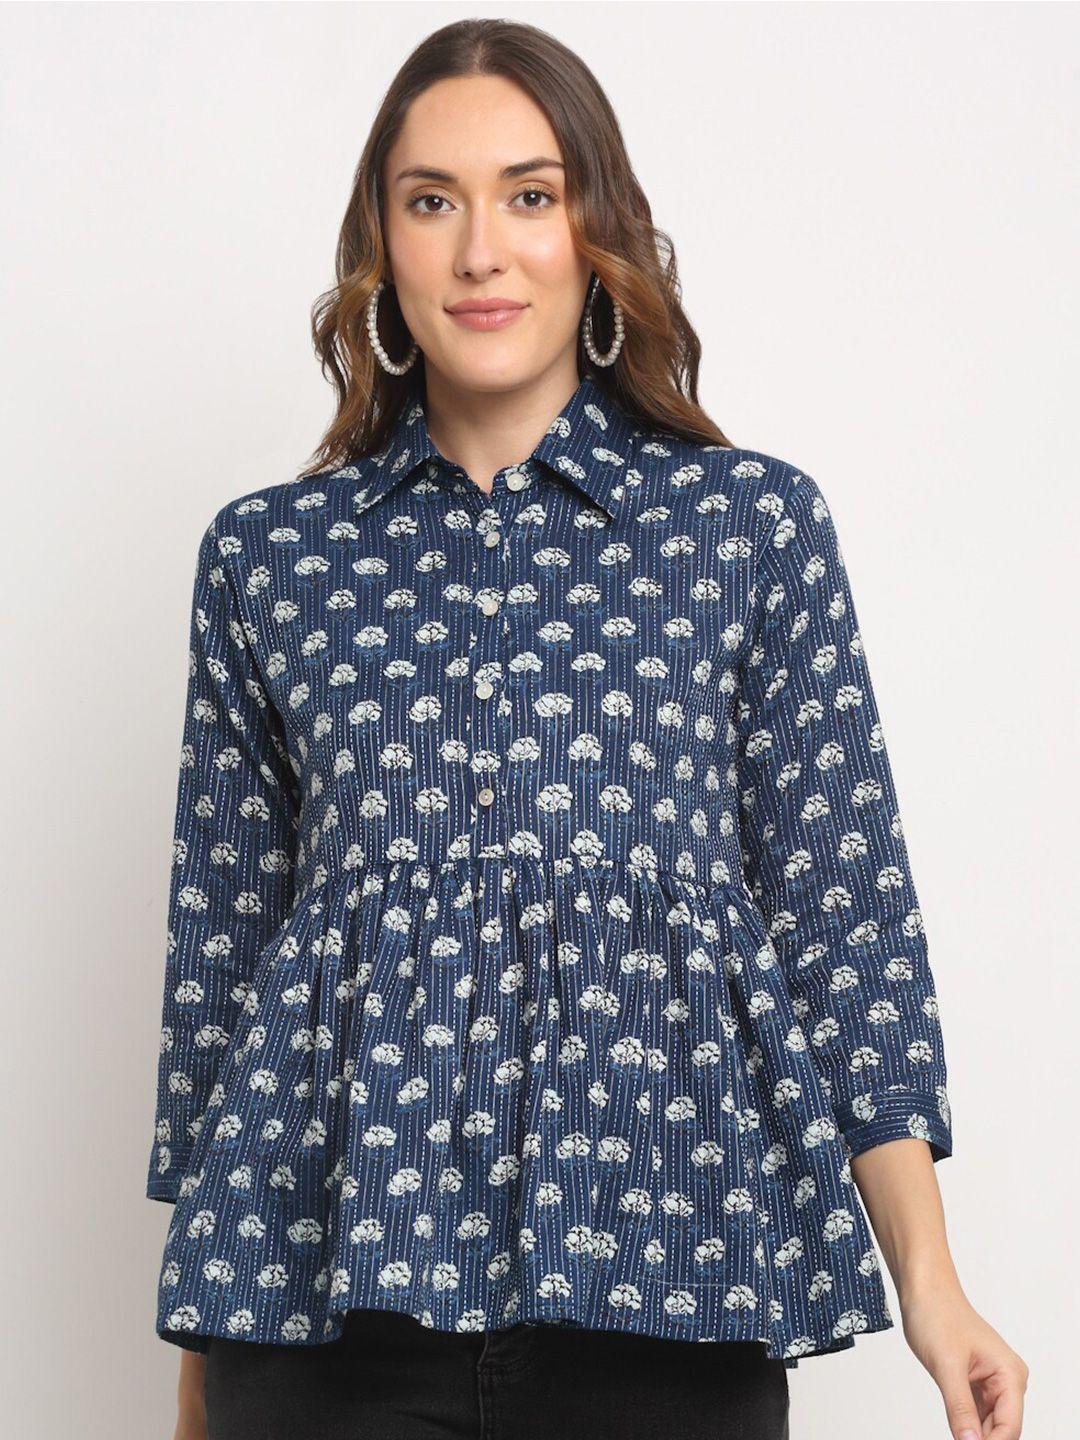 kalini floral printed shirt collar gathered cotton shirt style top